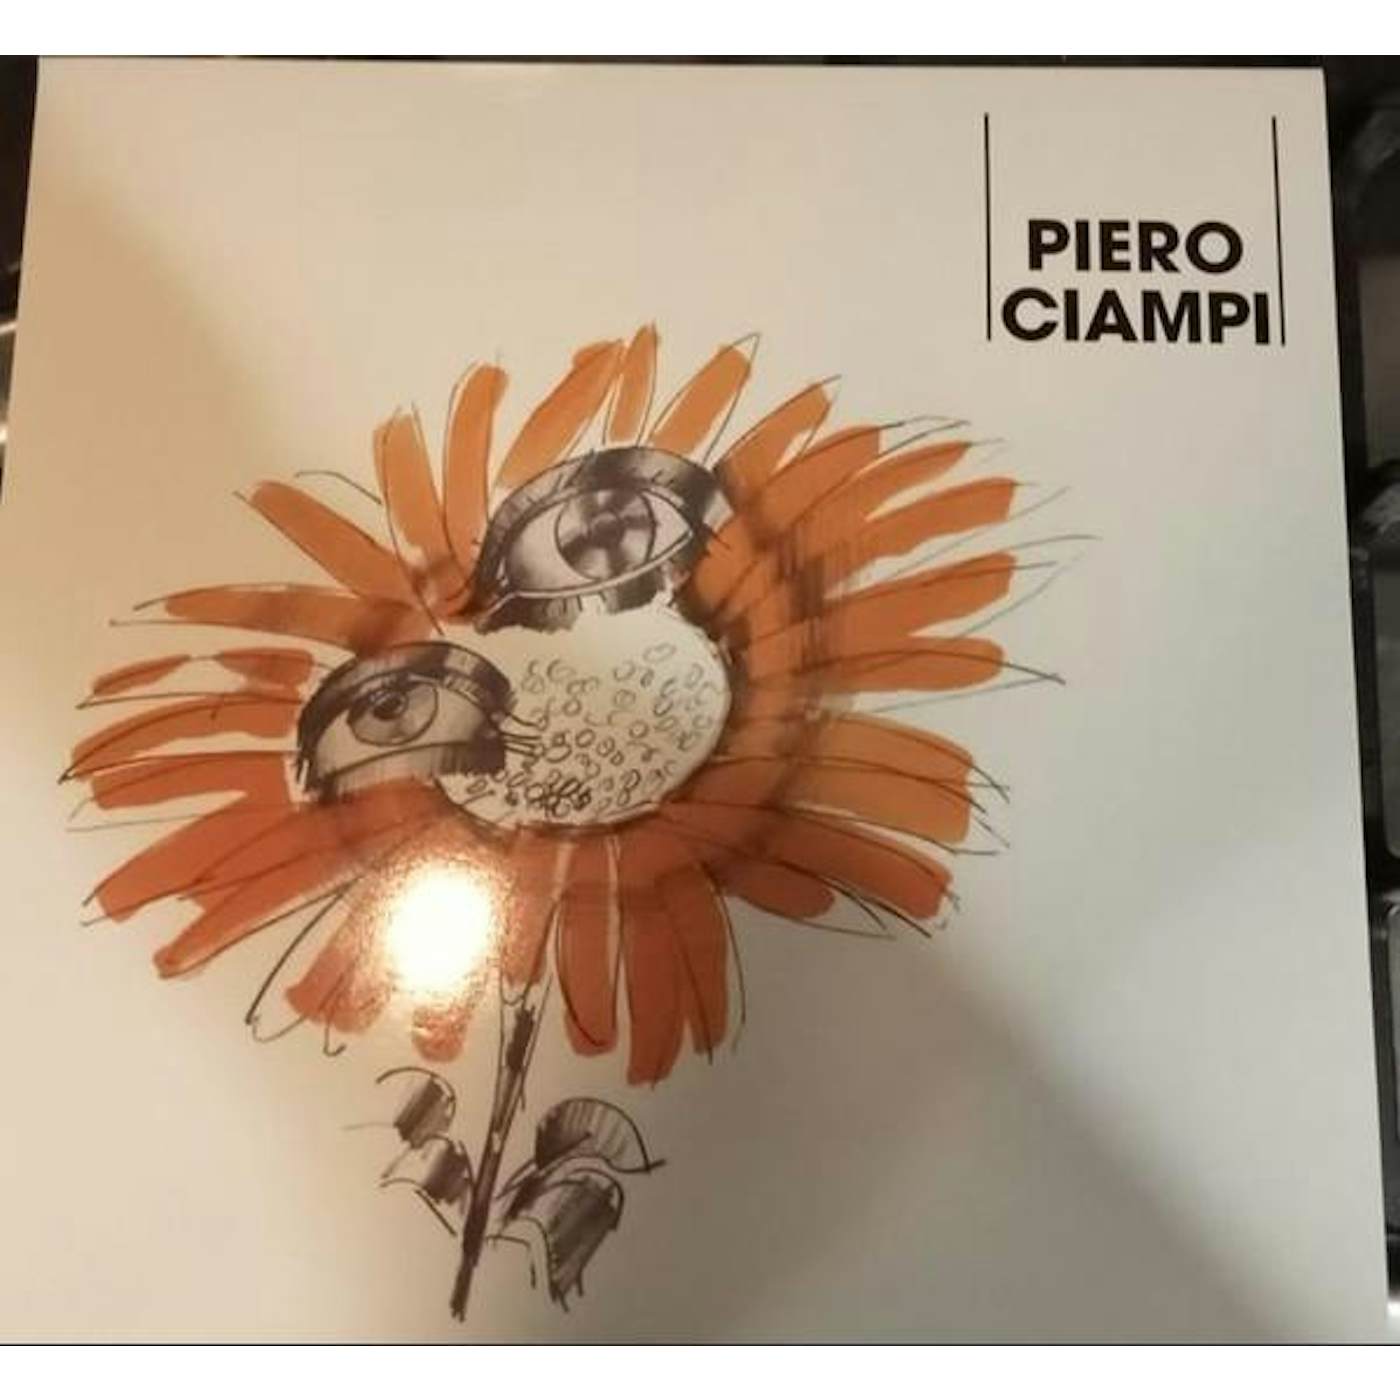 Piero Ciampi Vinyl Record